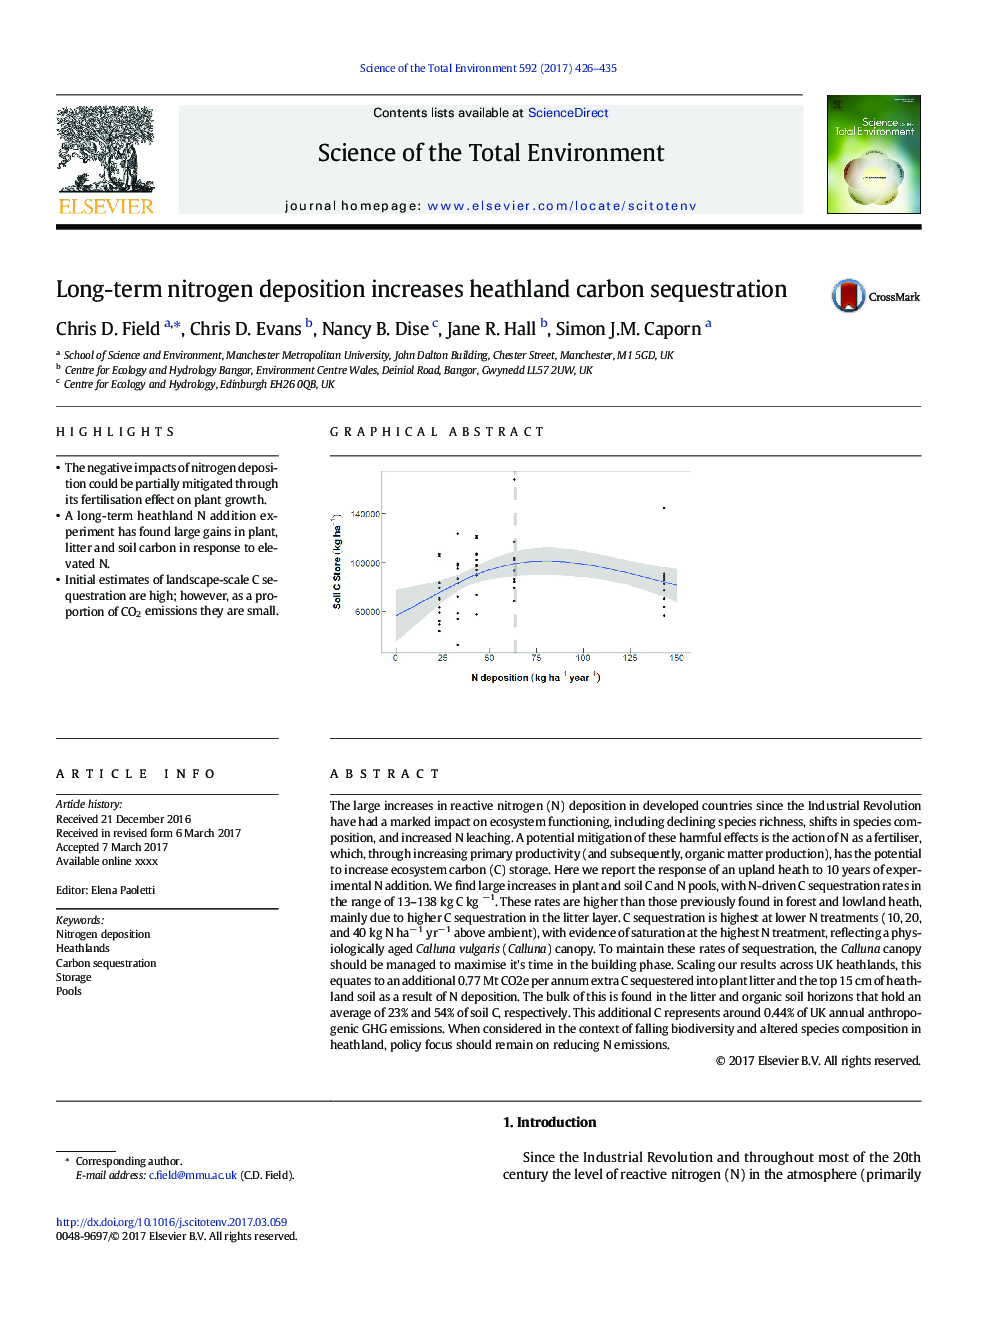 Long-term nitrogen deposition increases heathland carbon sequestration